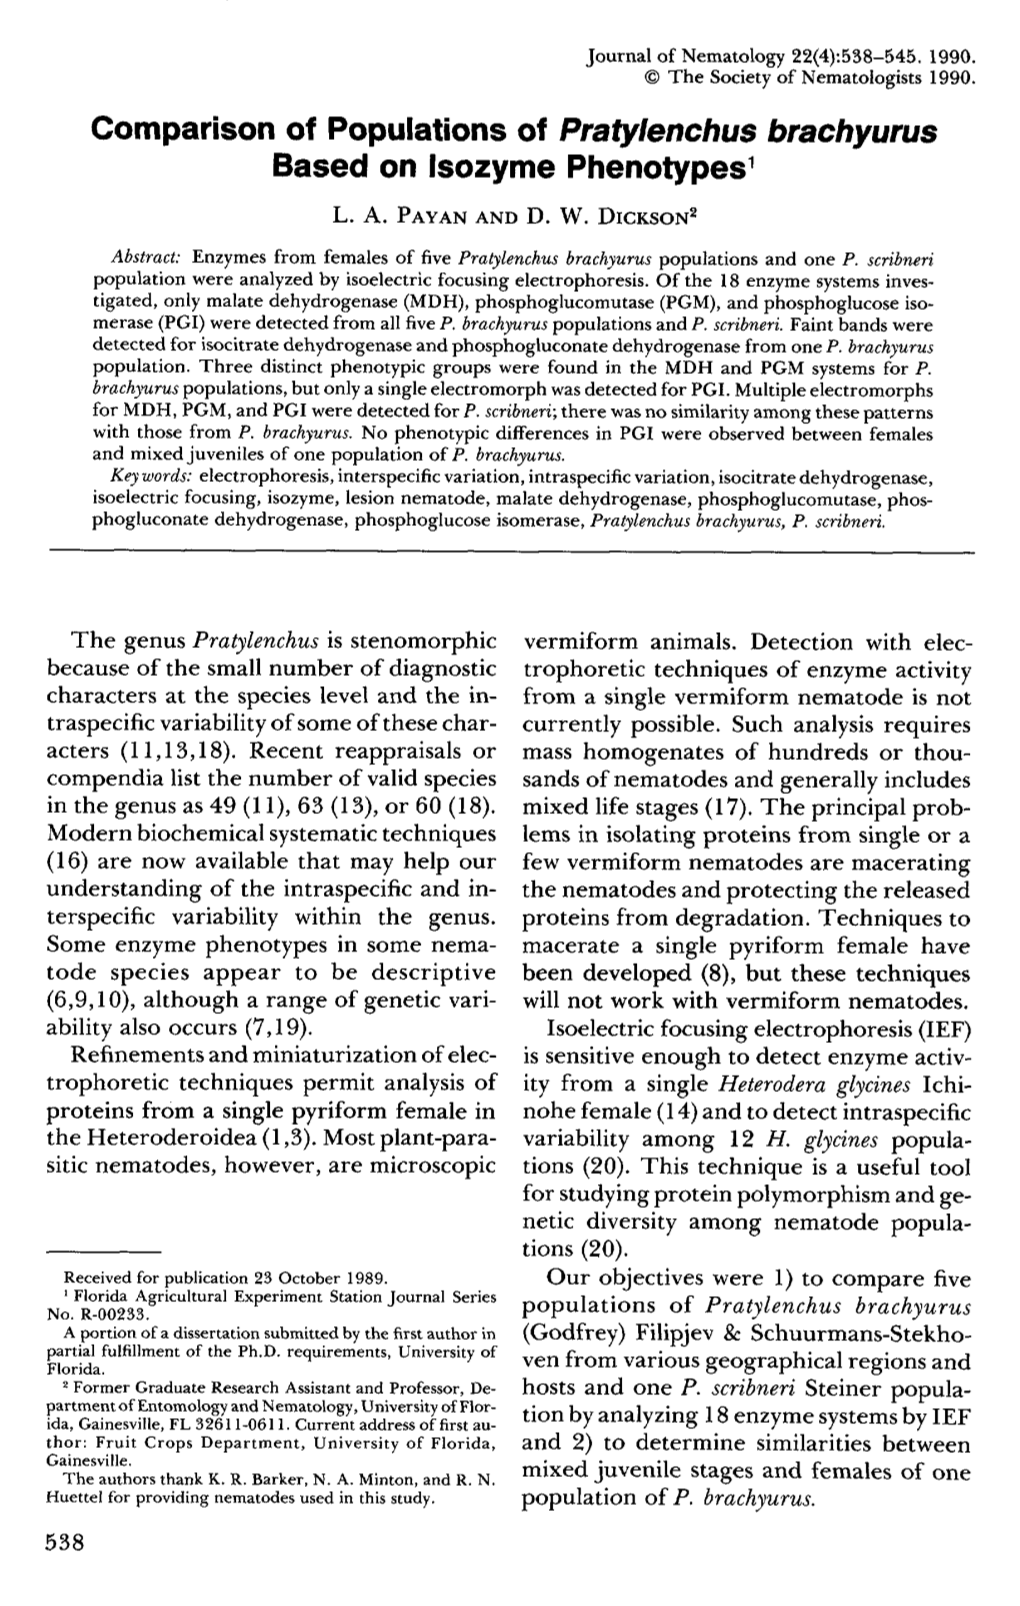 Comparison of Populations of Pratylenchus Brachyurus Based on Isozyme Phenotypes 1